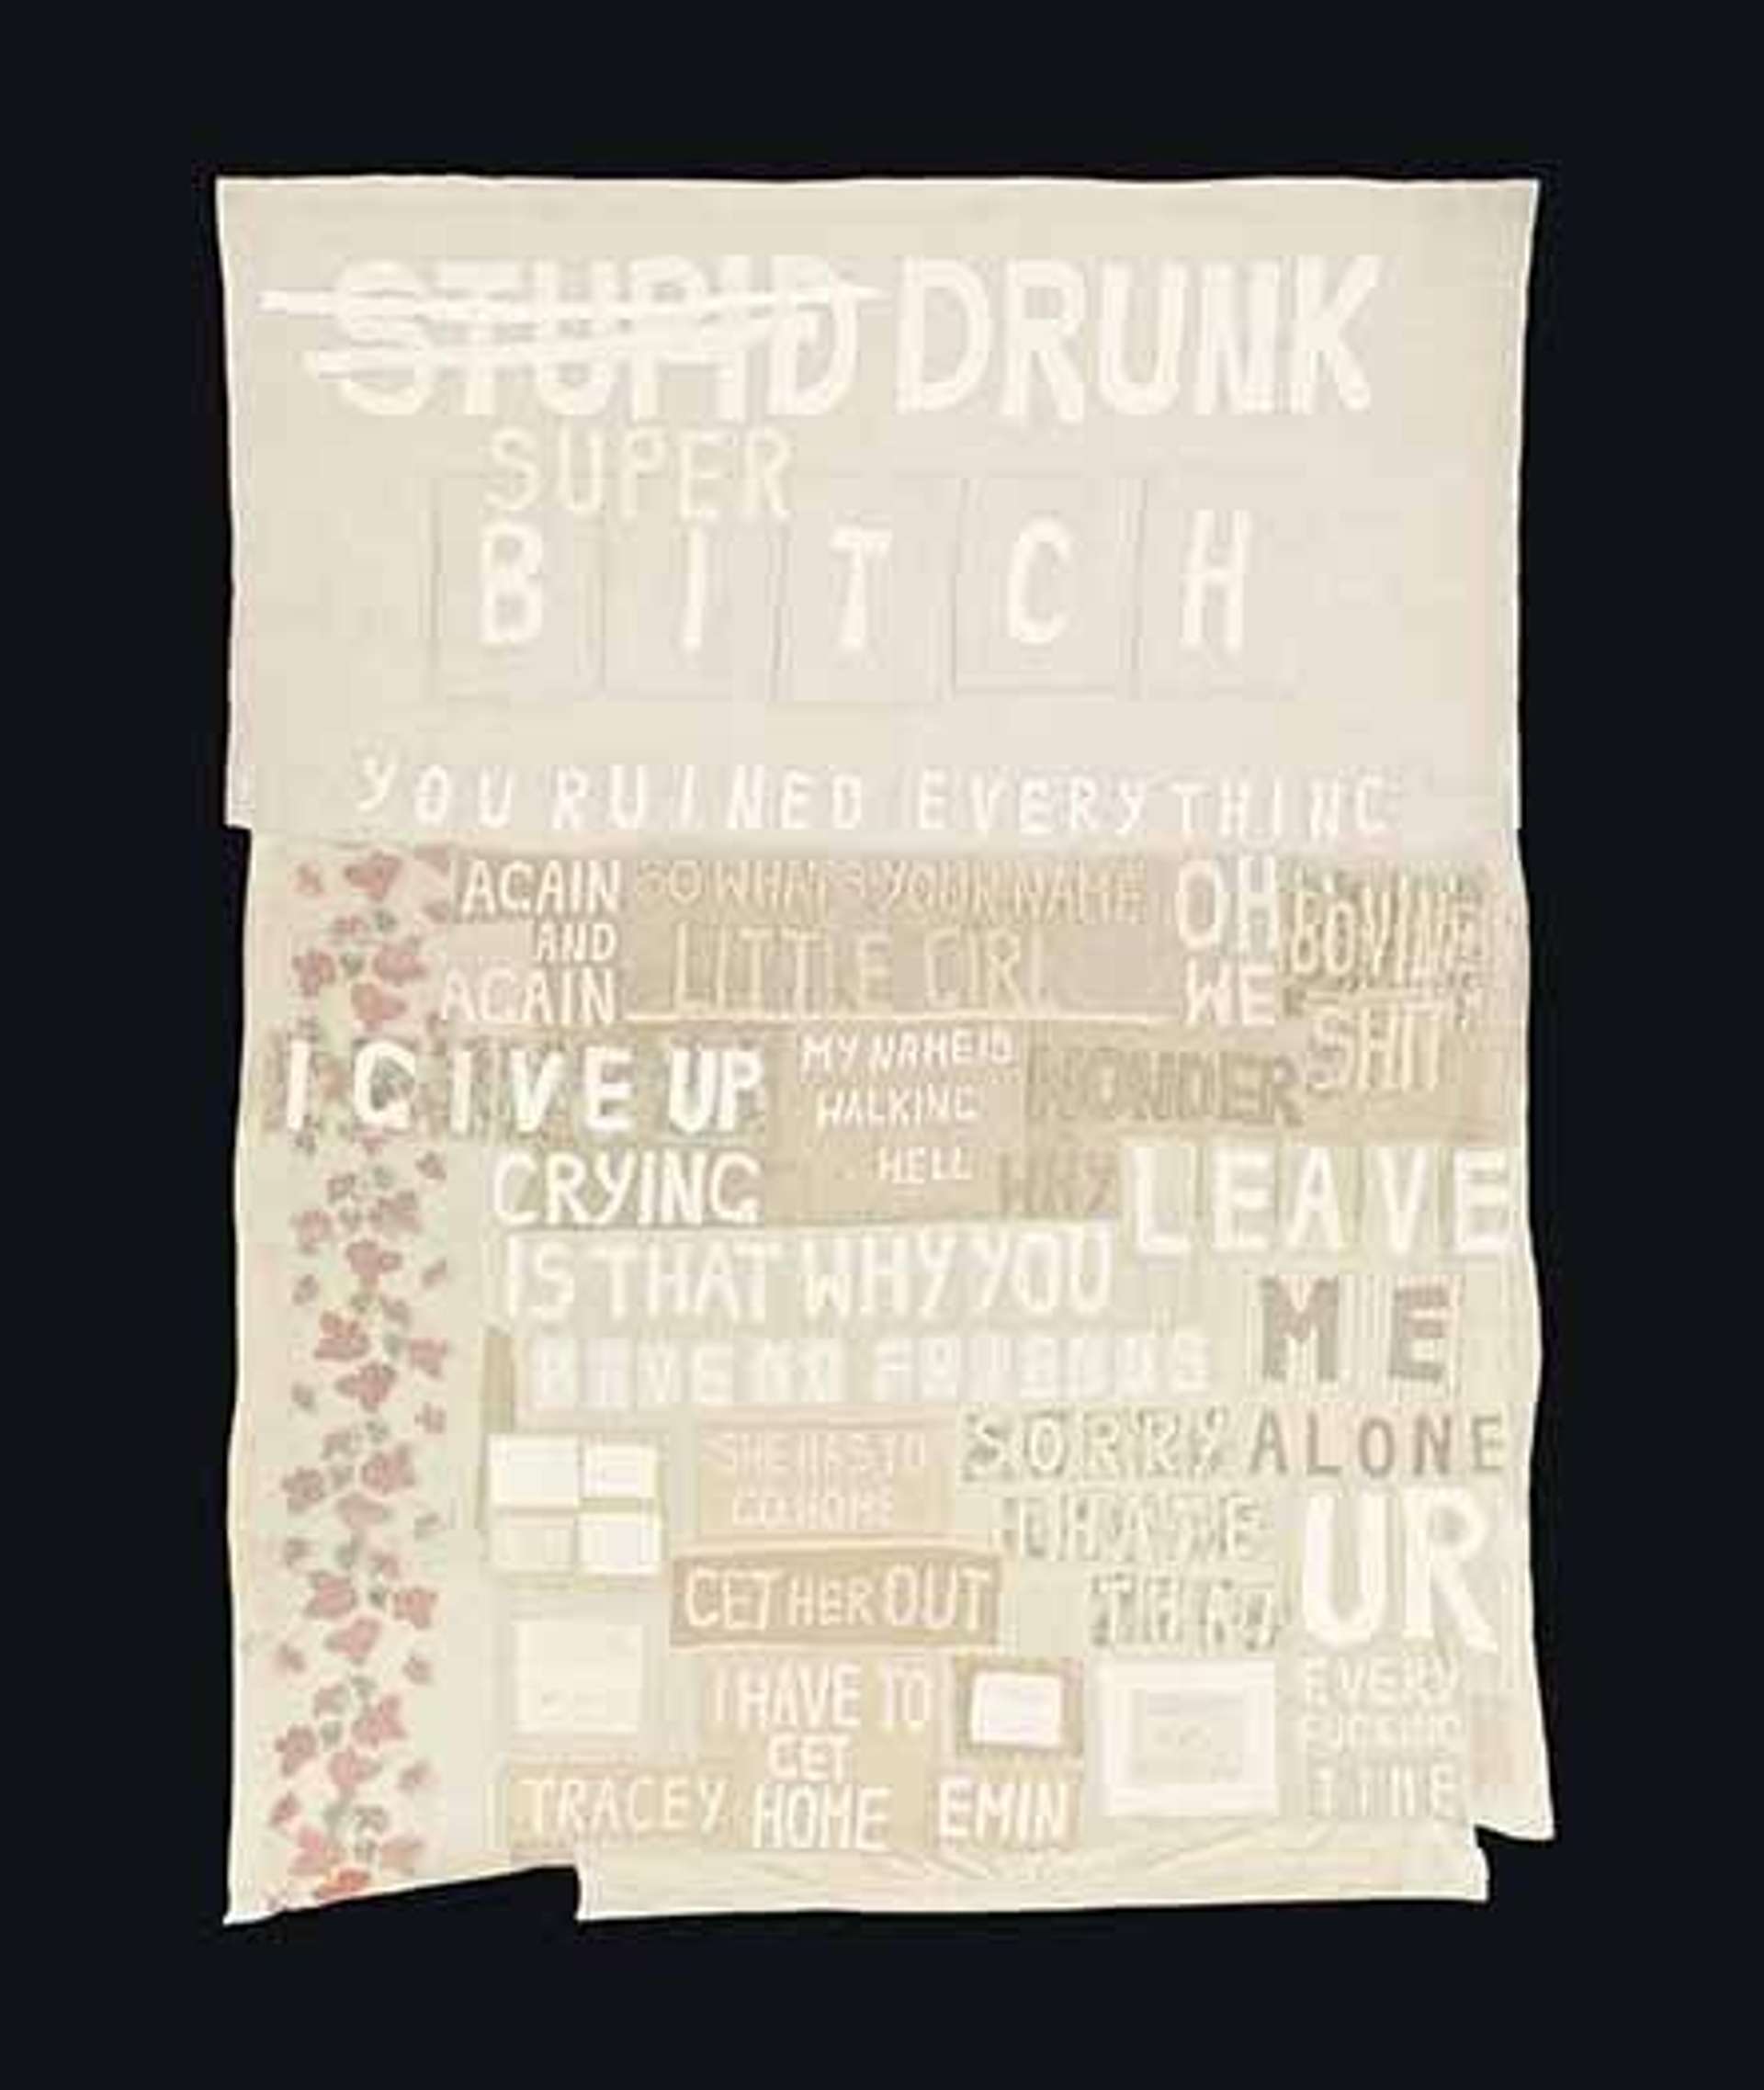 Super Drunk Bitch by Tracey Emin